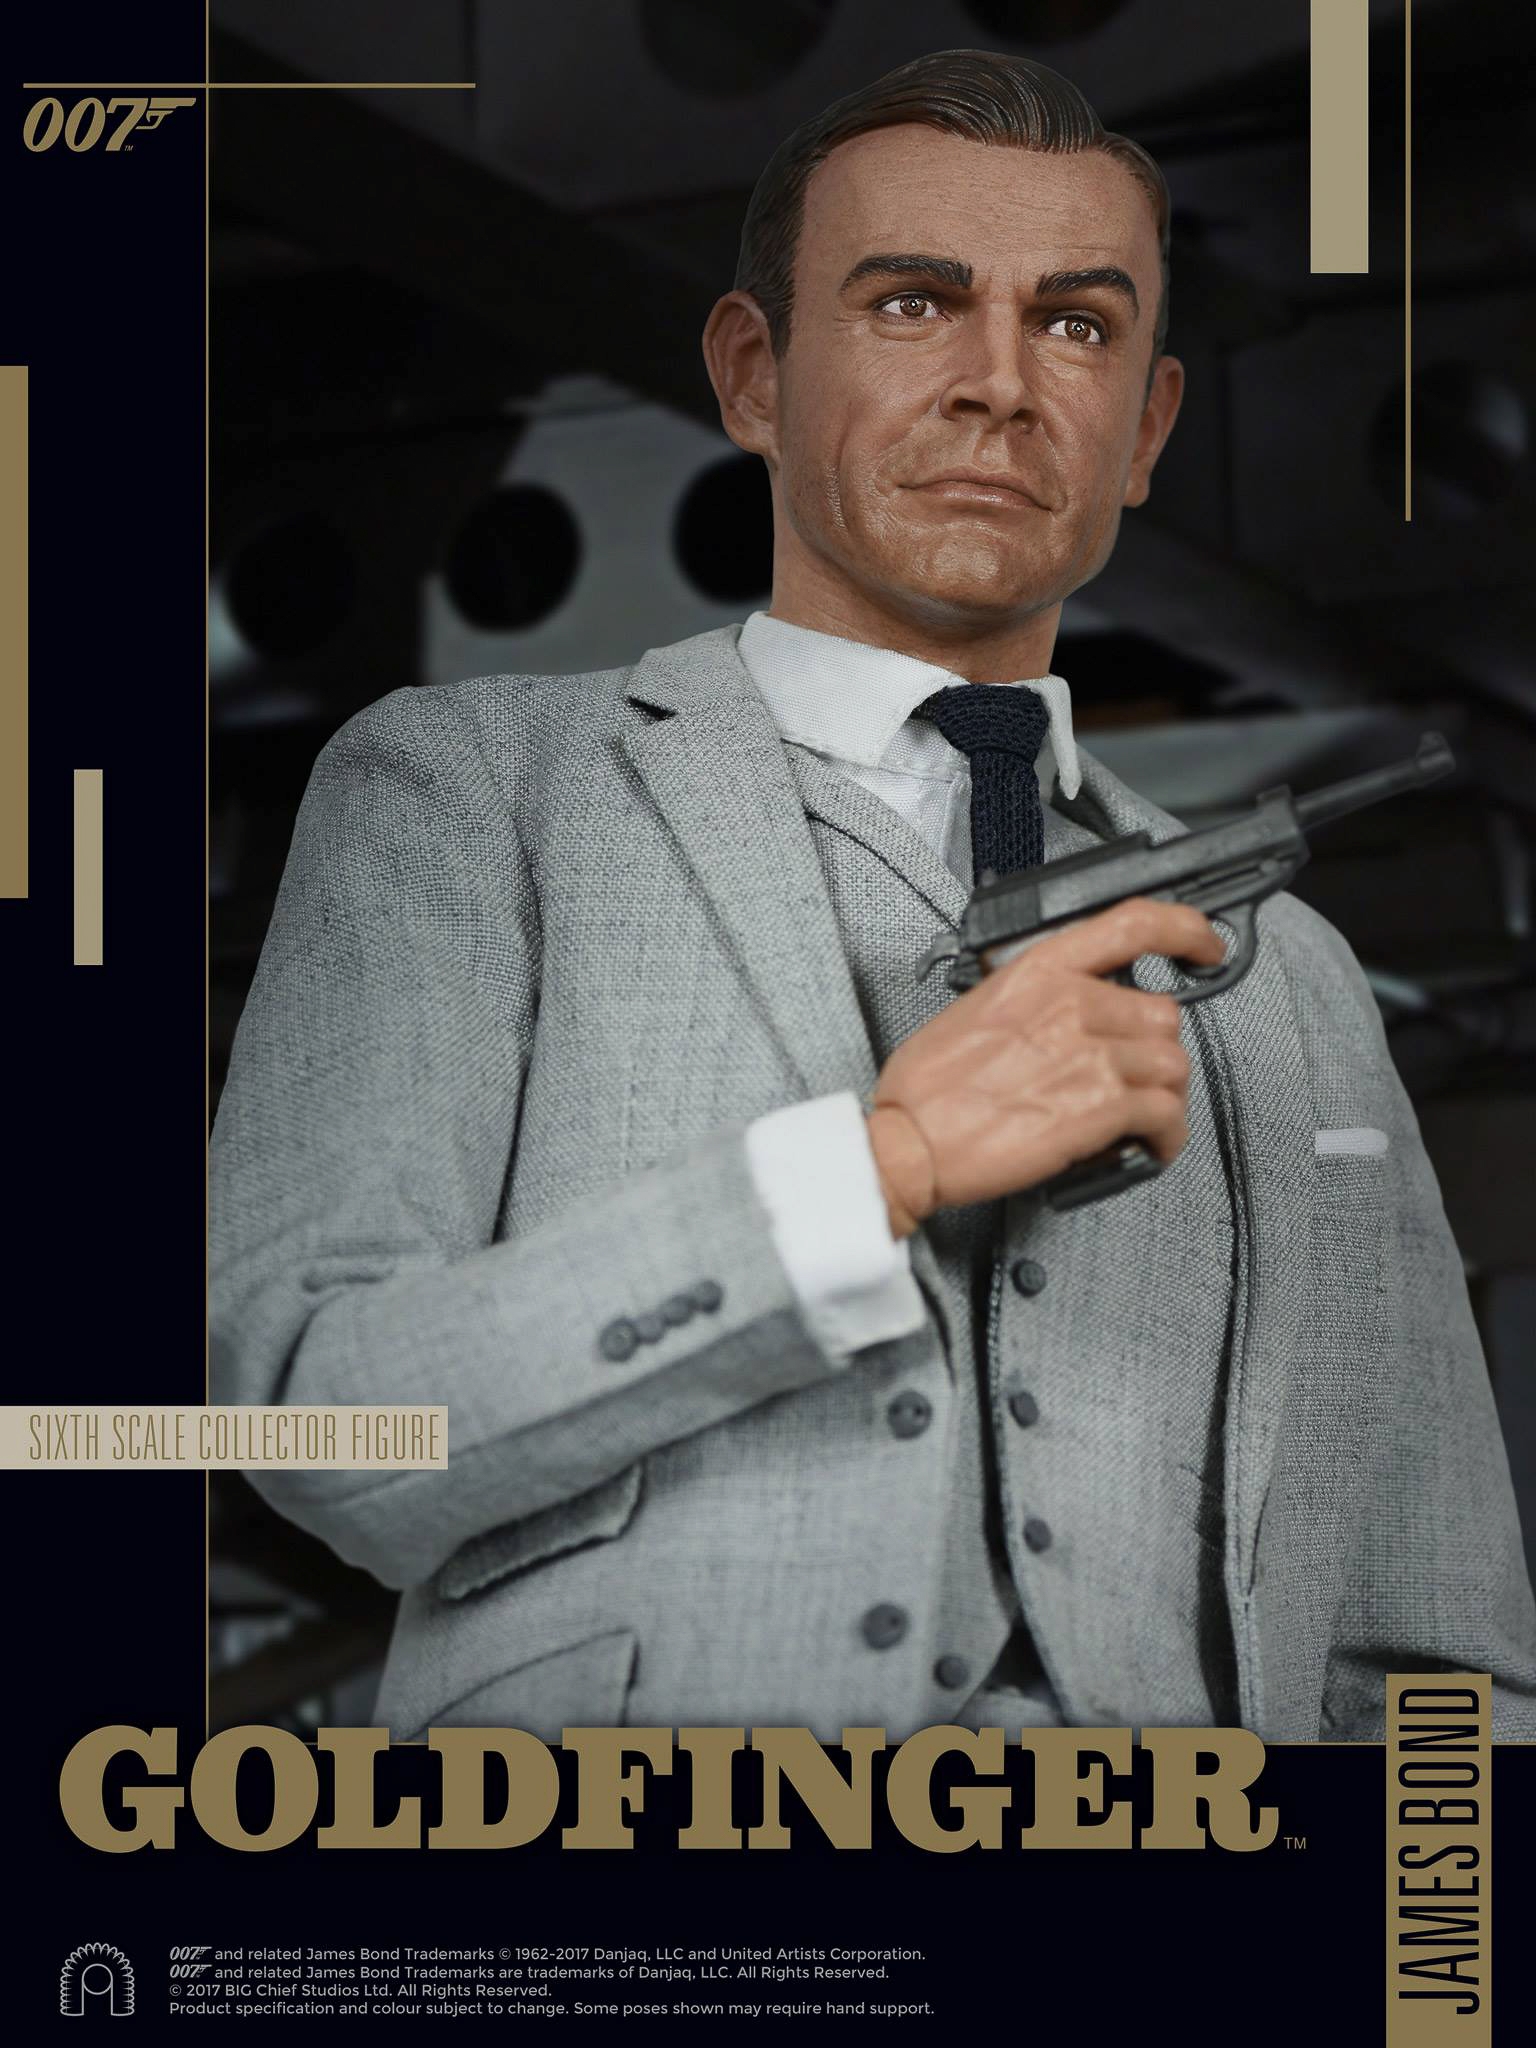 Big-Chief-James-Bond-Goldfinger-Oddjob-Full-Reveal-008.jpg